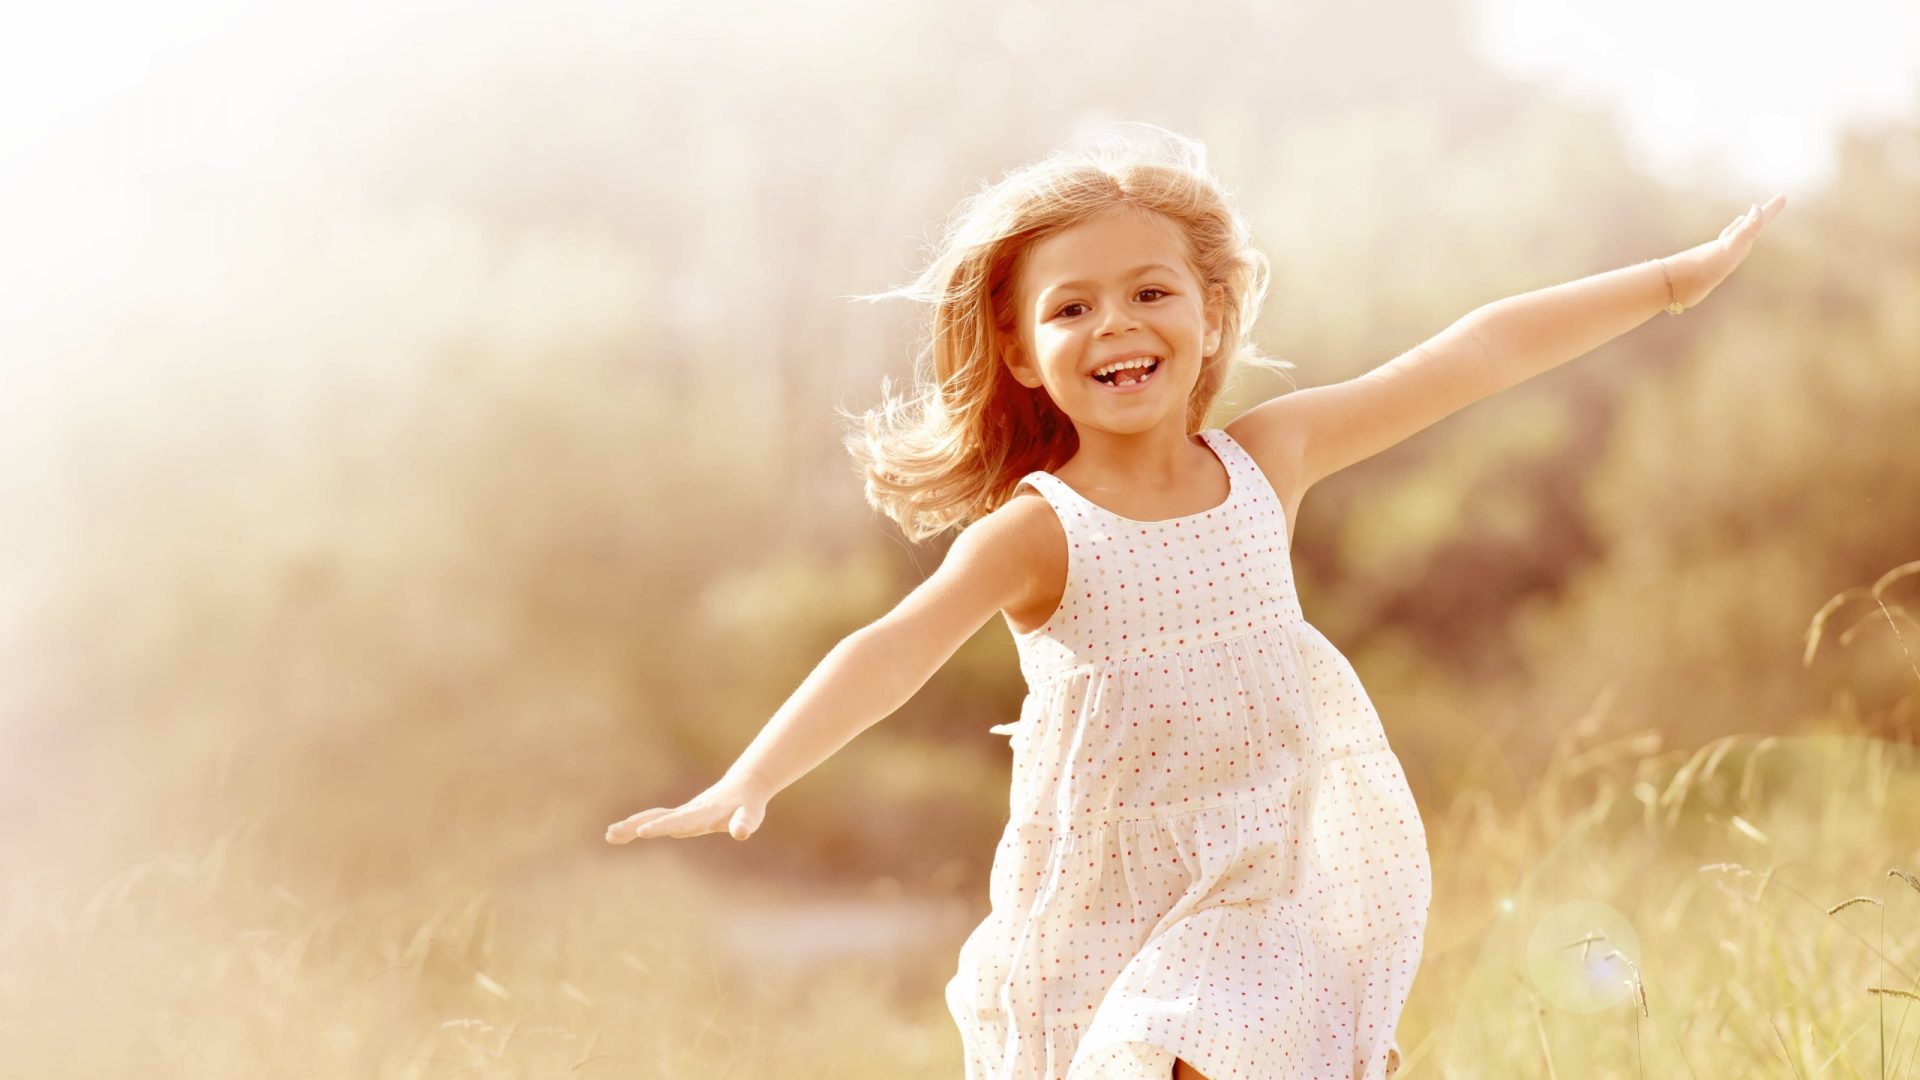 Little girl running in country field in summer